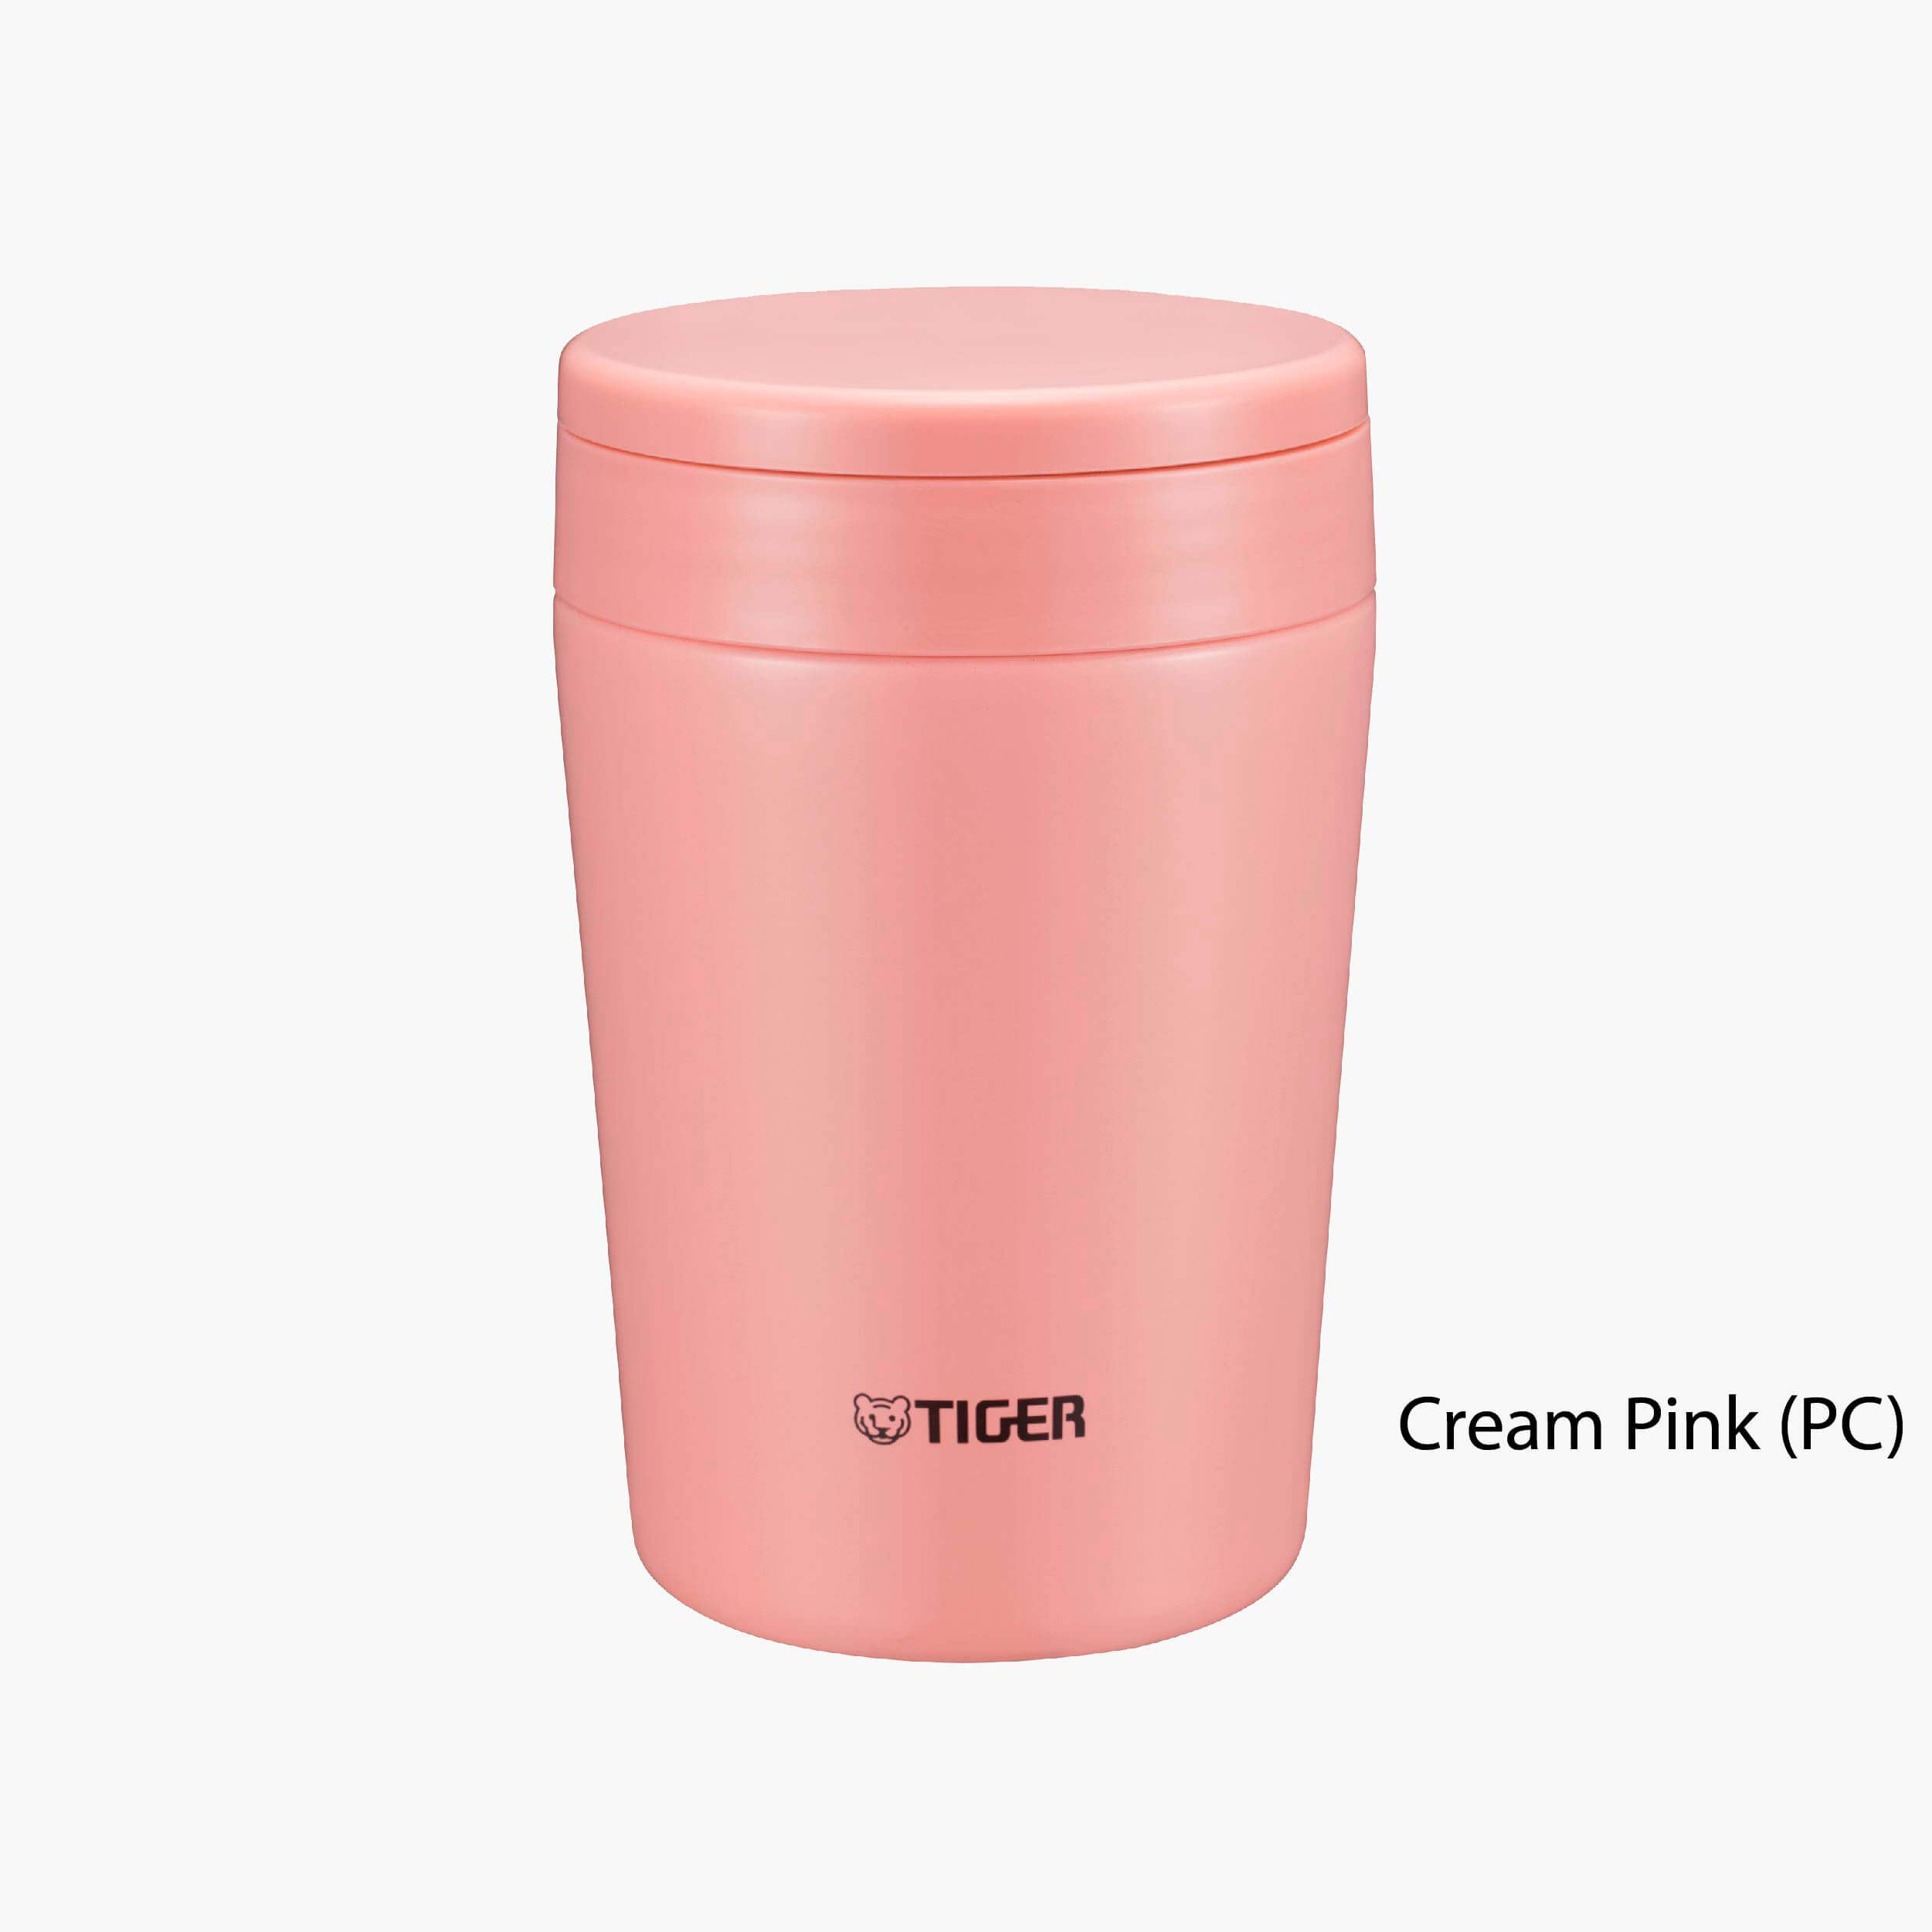 Cream Pink (PC)